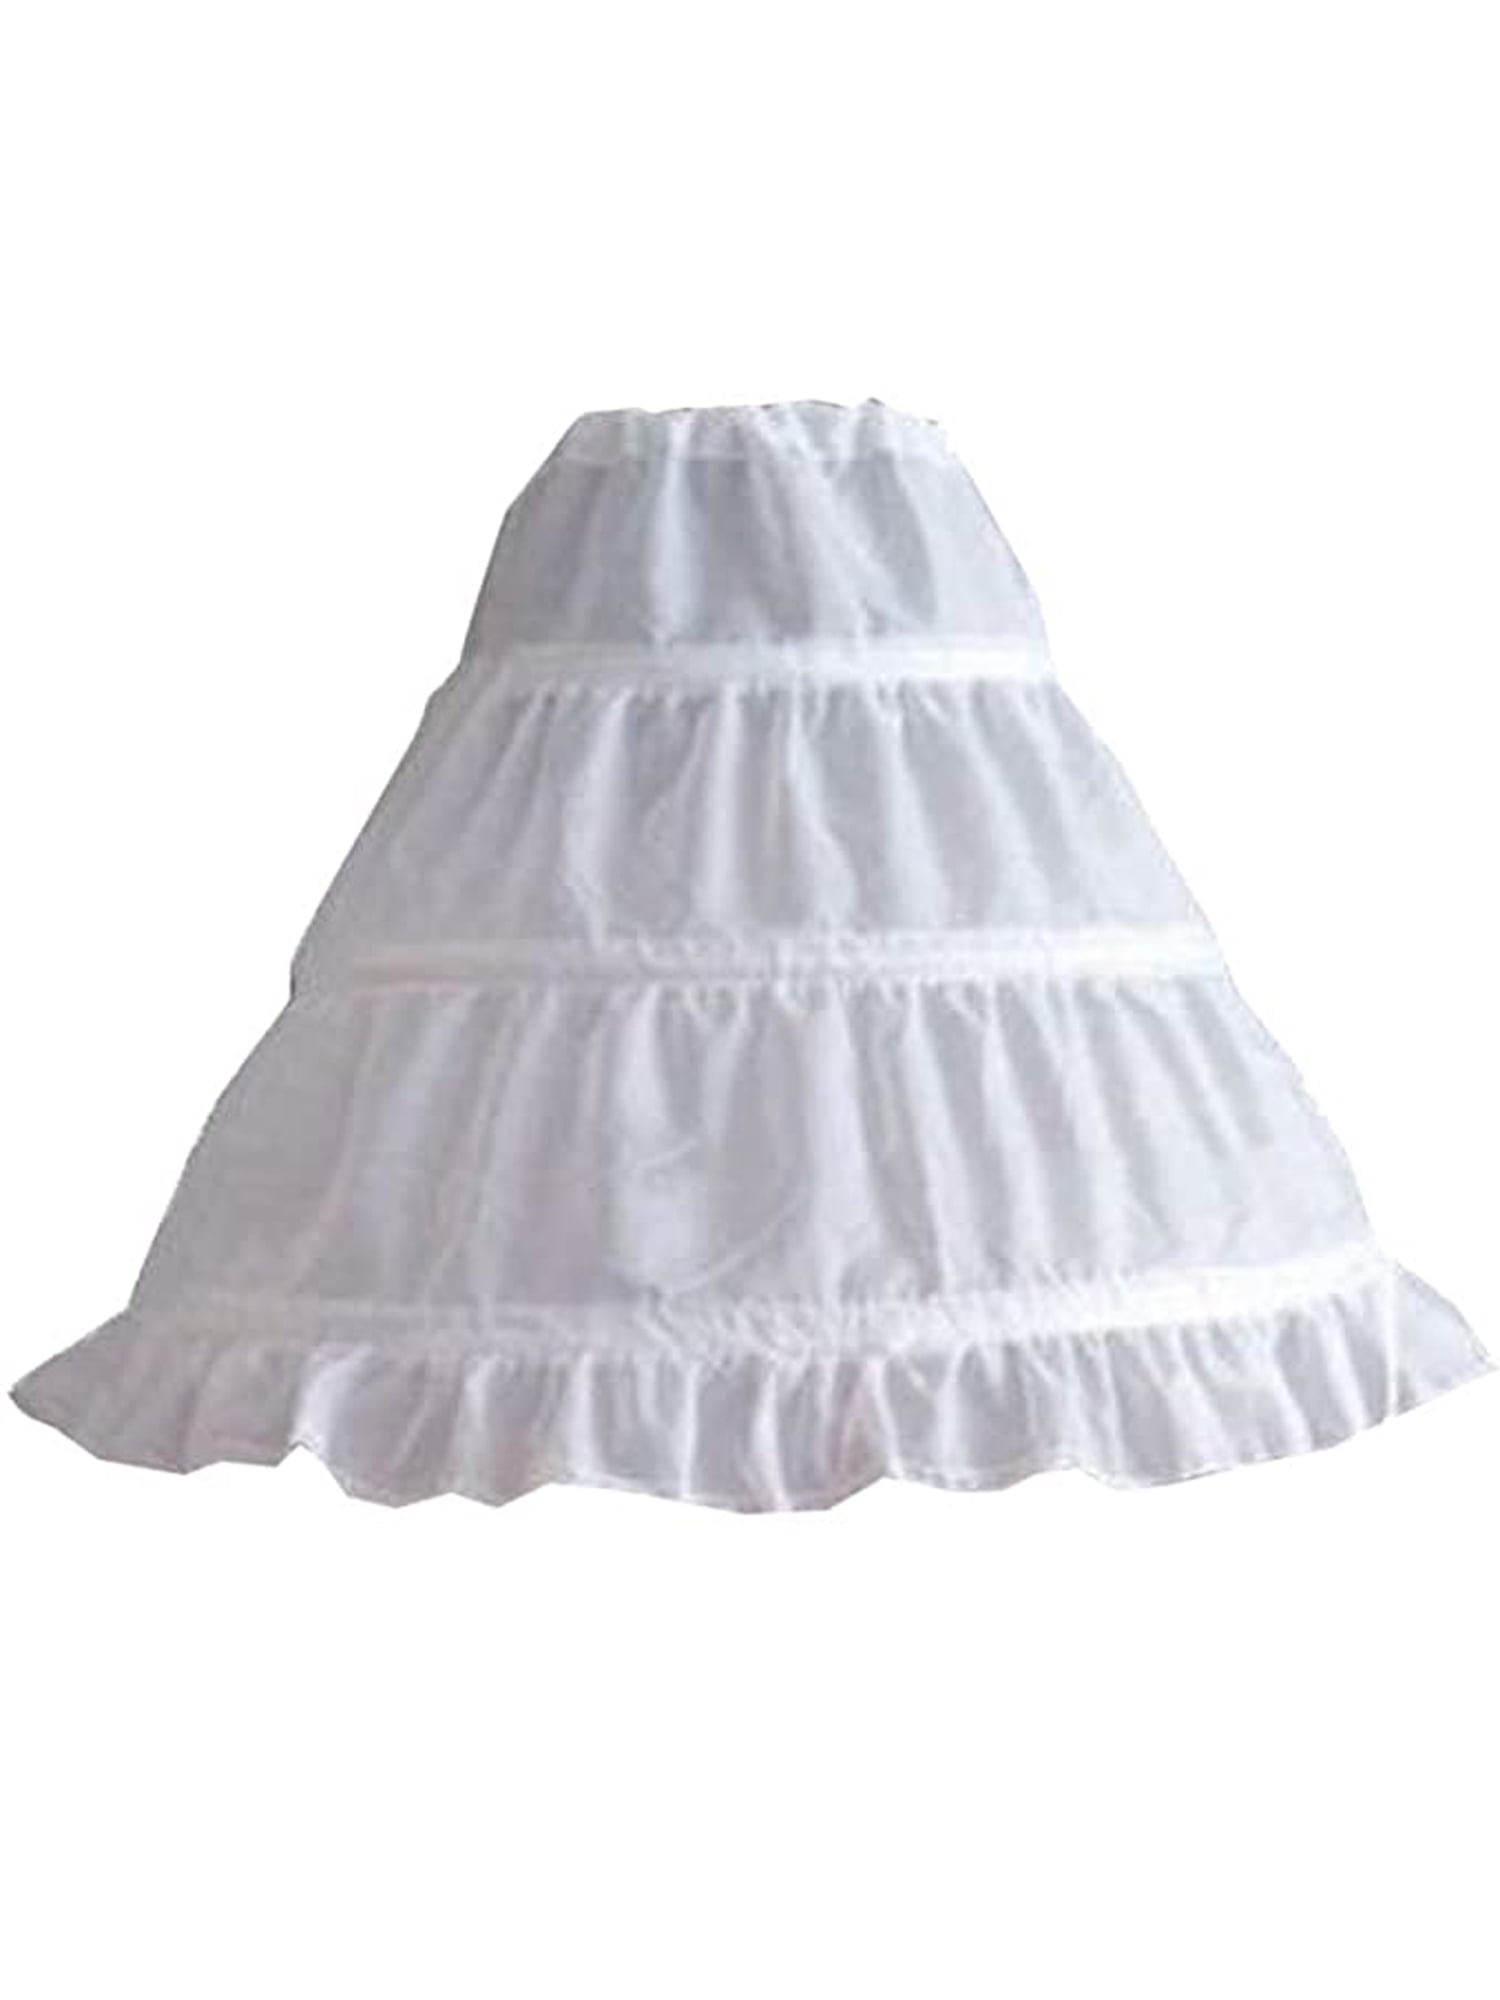 Flower Girl dress Children Underskirt Kid Wedding Crinoline Petticoat Size S M L 